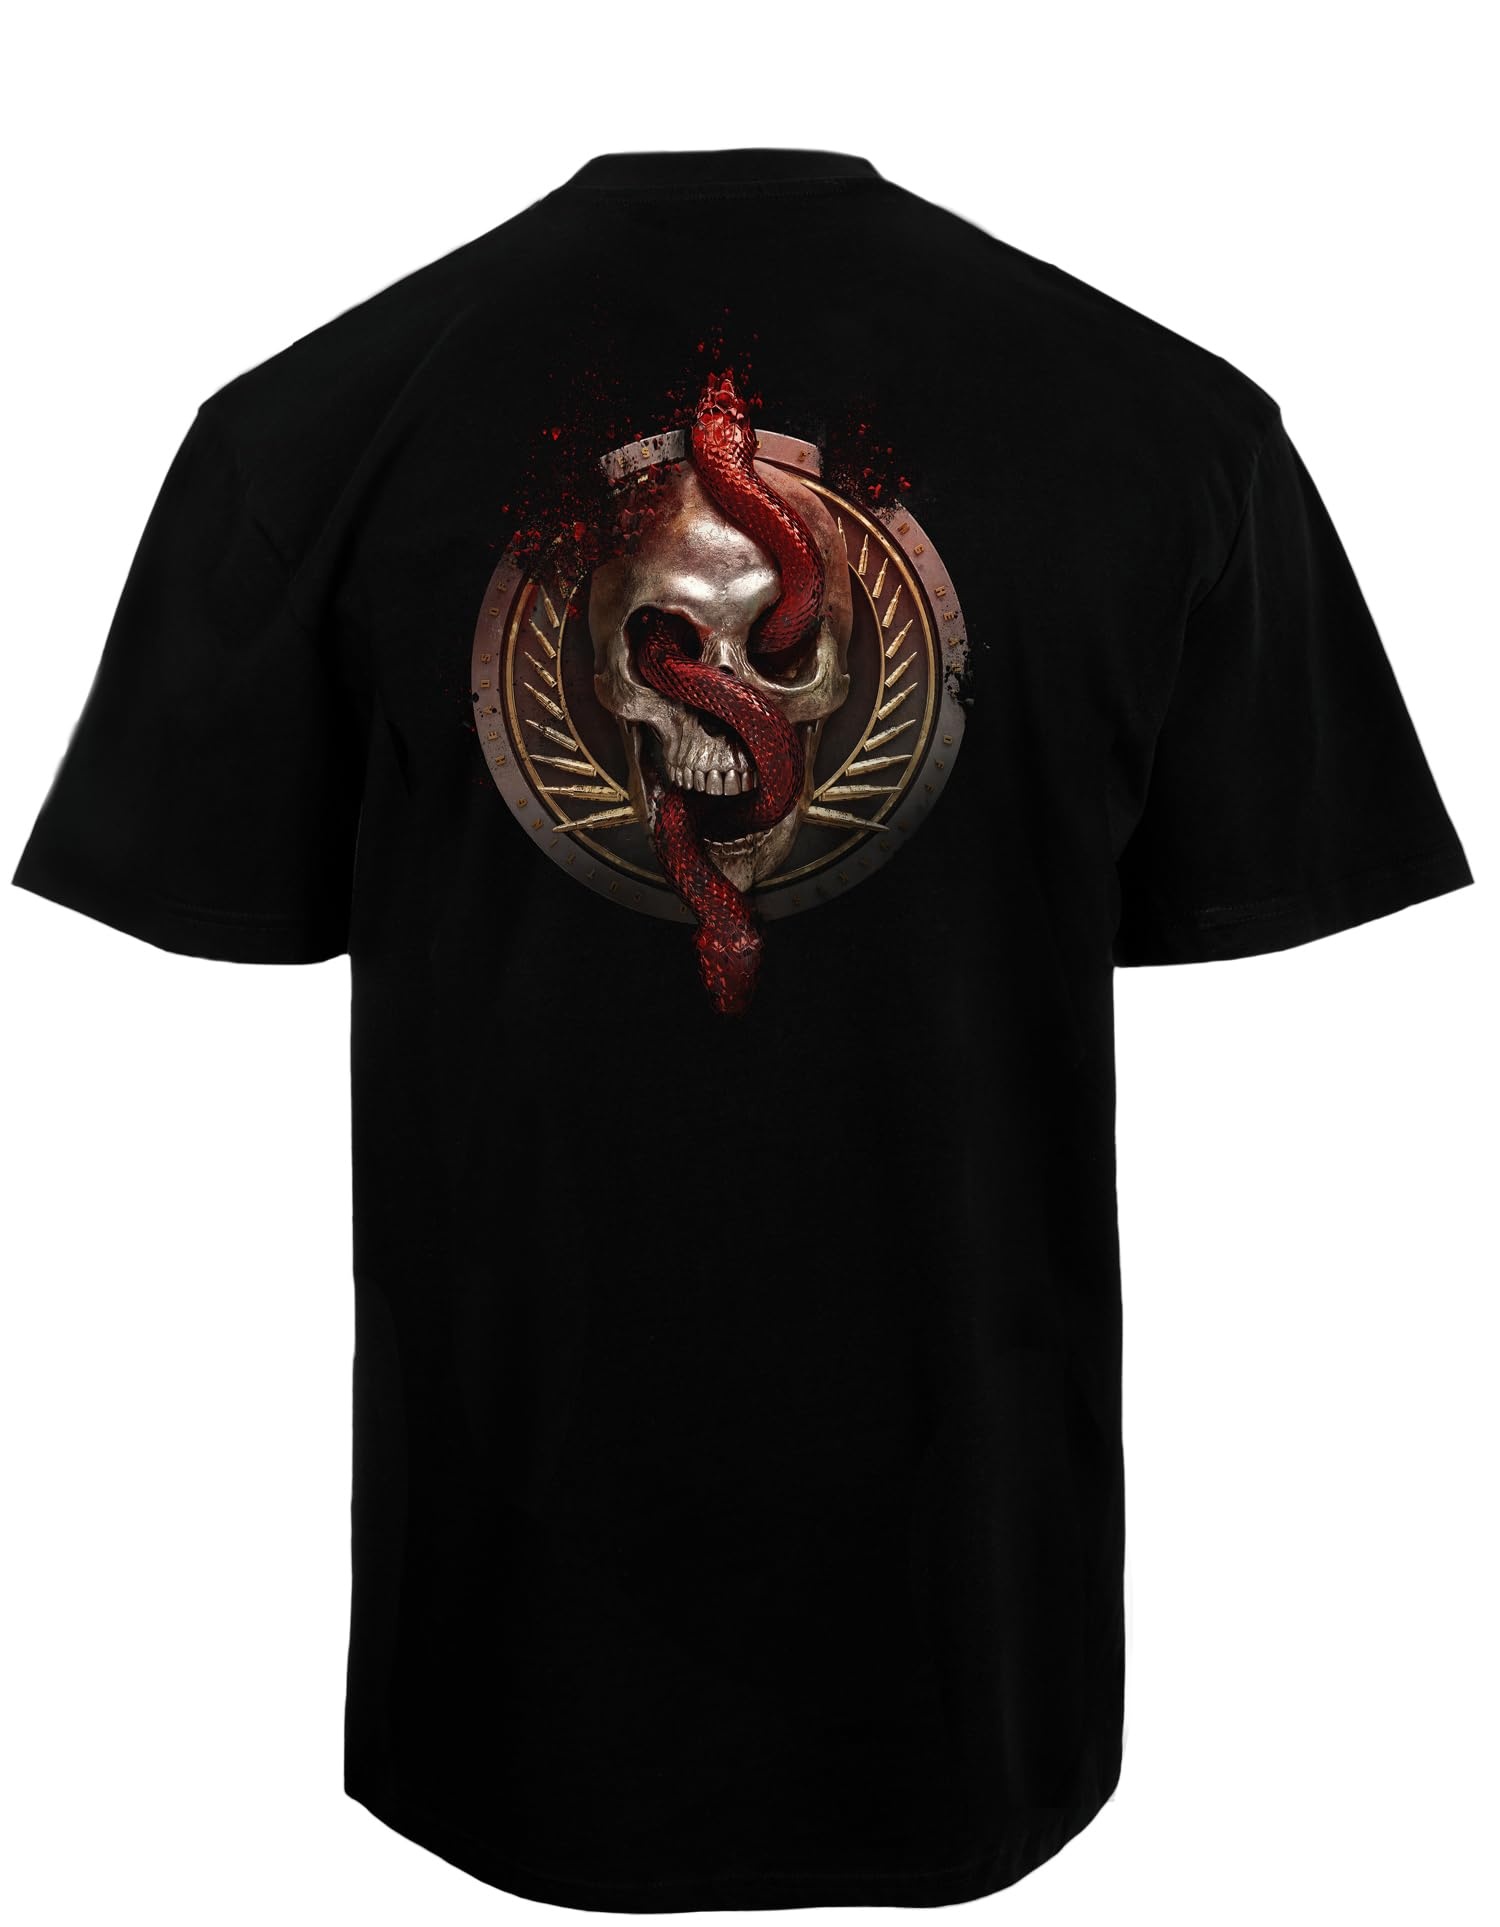 Call of Duty Unisex T-Shirt "Logo" Black Size M